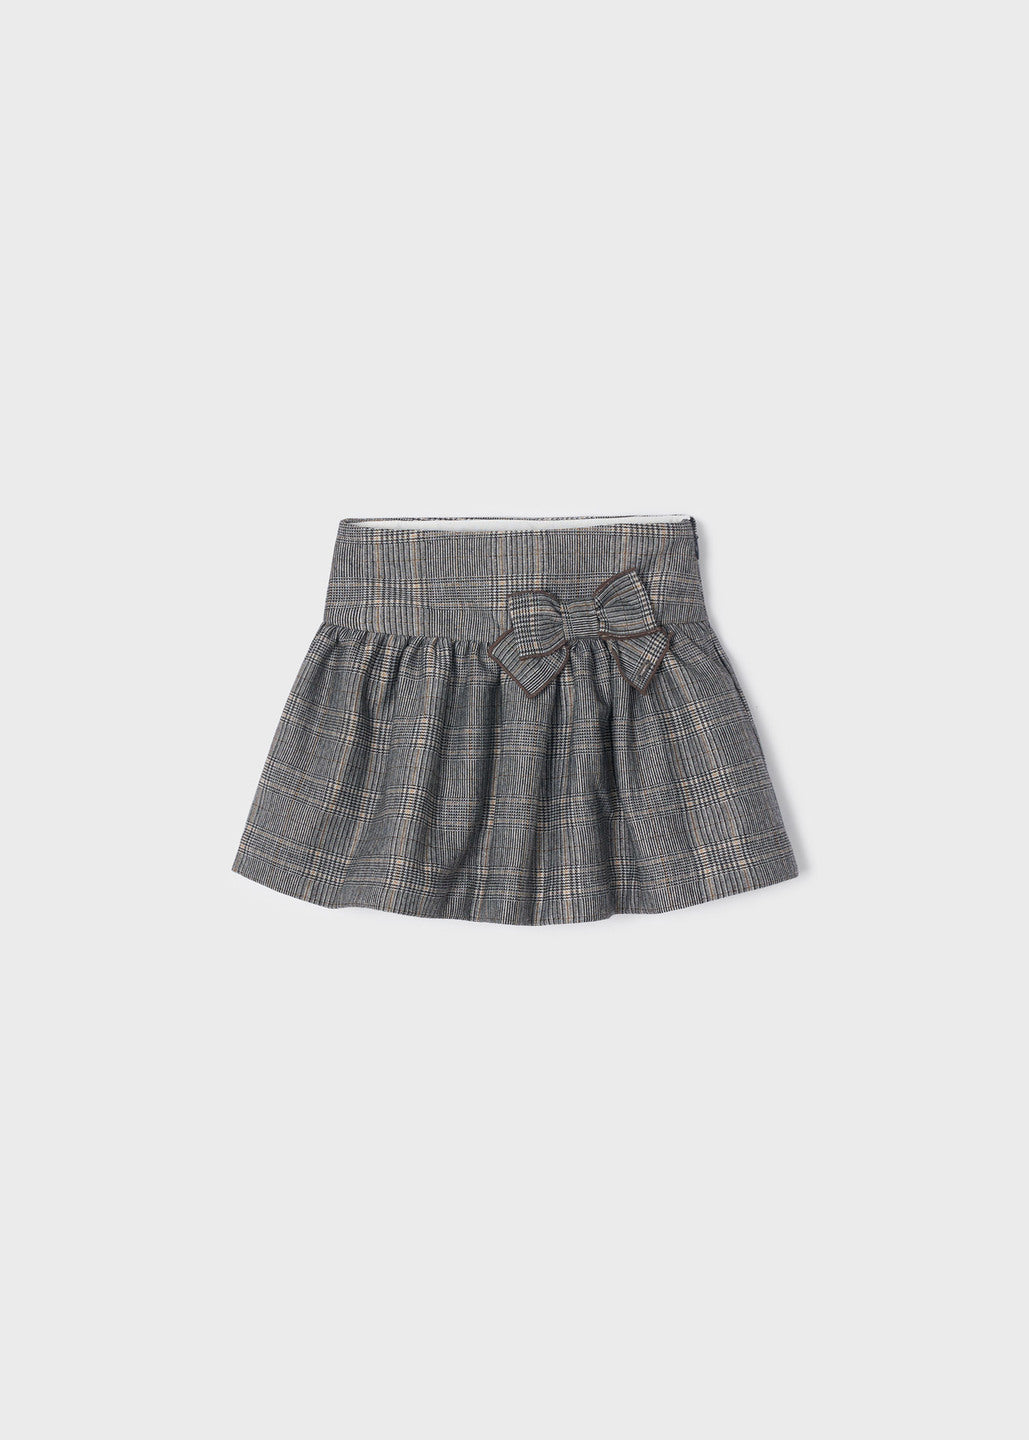 Grey Plaid Bow Skirt